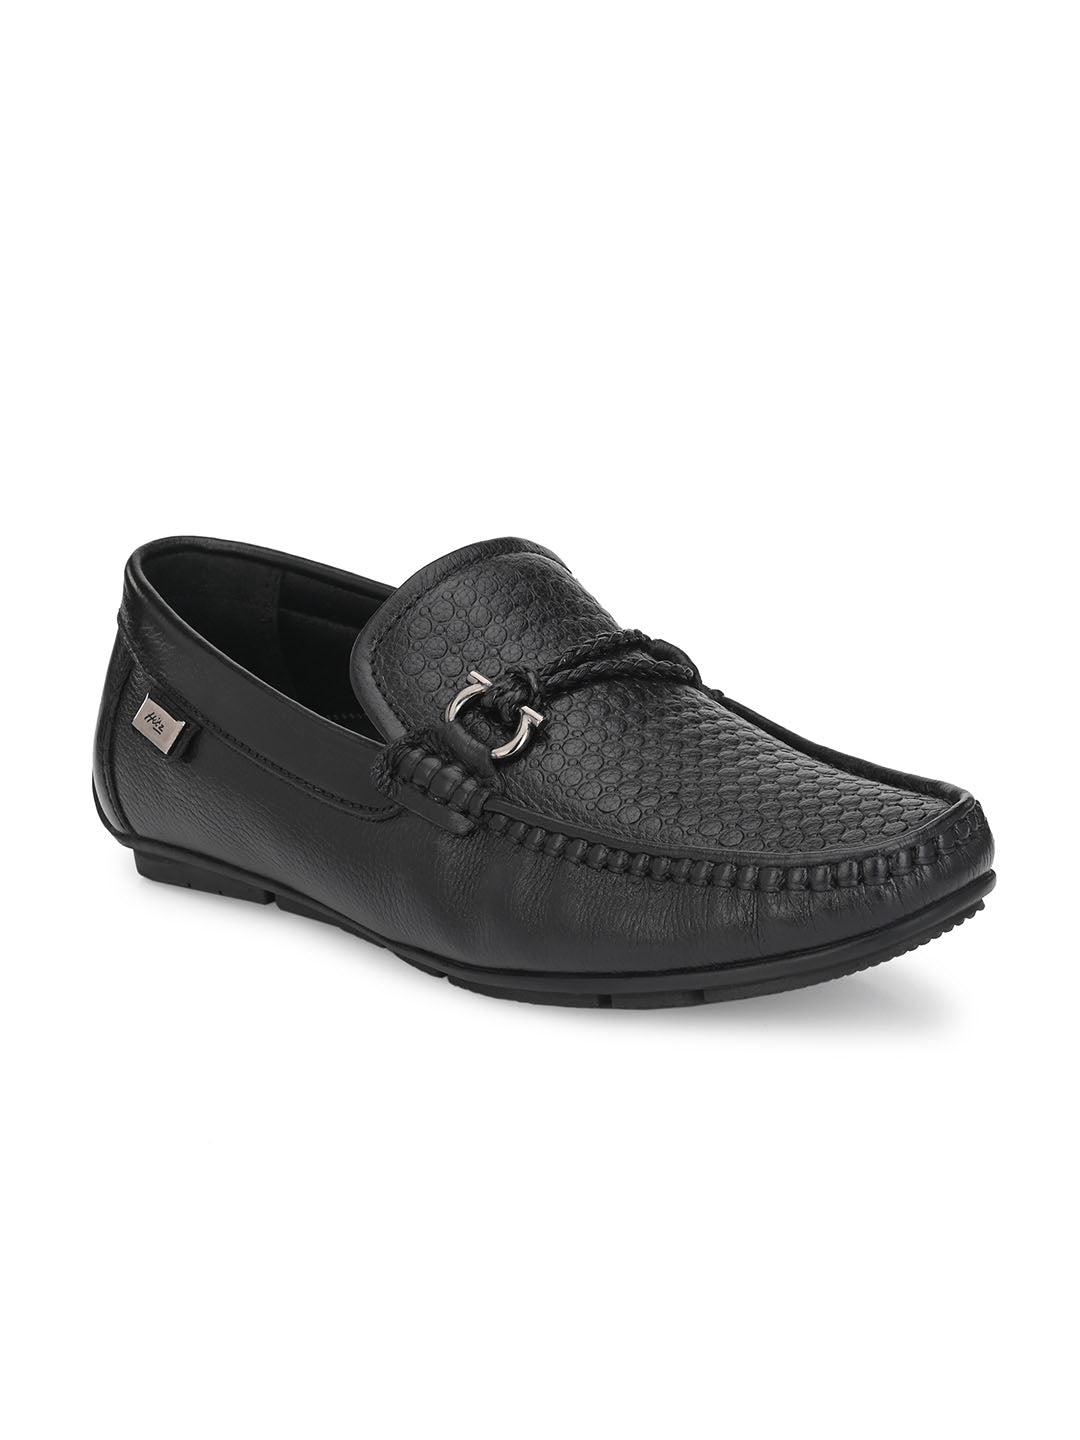 Hitz Men's Black Leather Slip-On Casual Loafer Shoes – Hitz Shoes Online